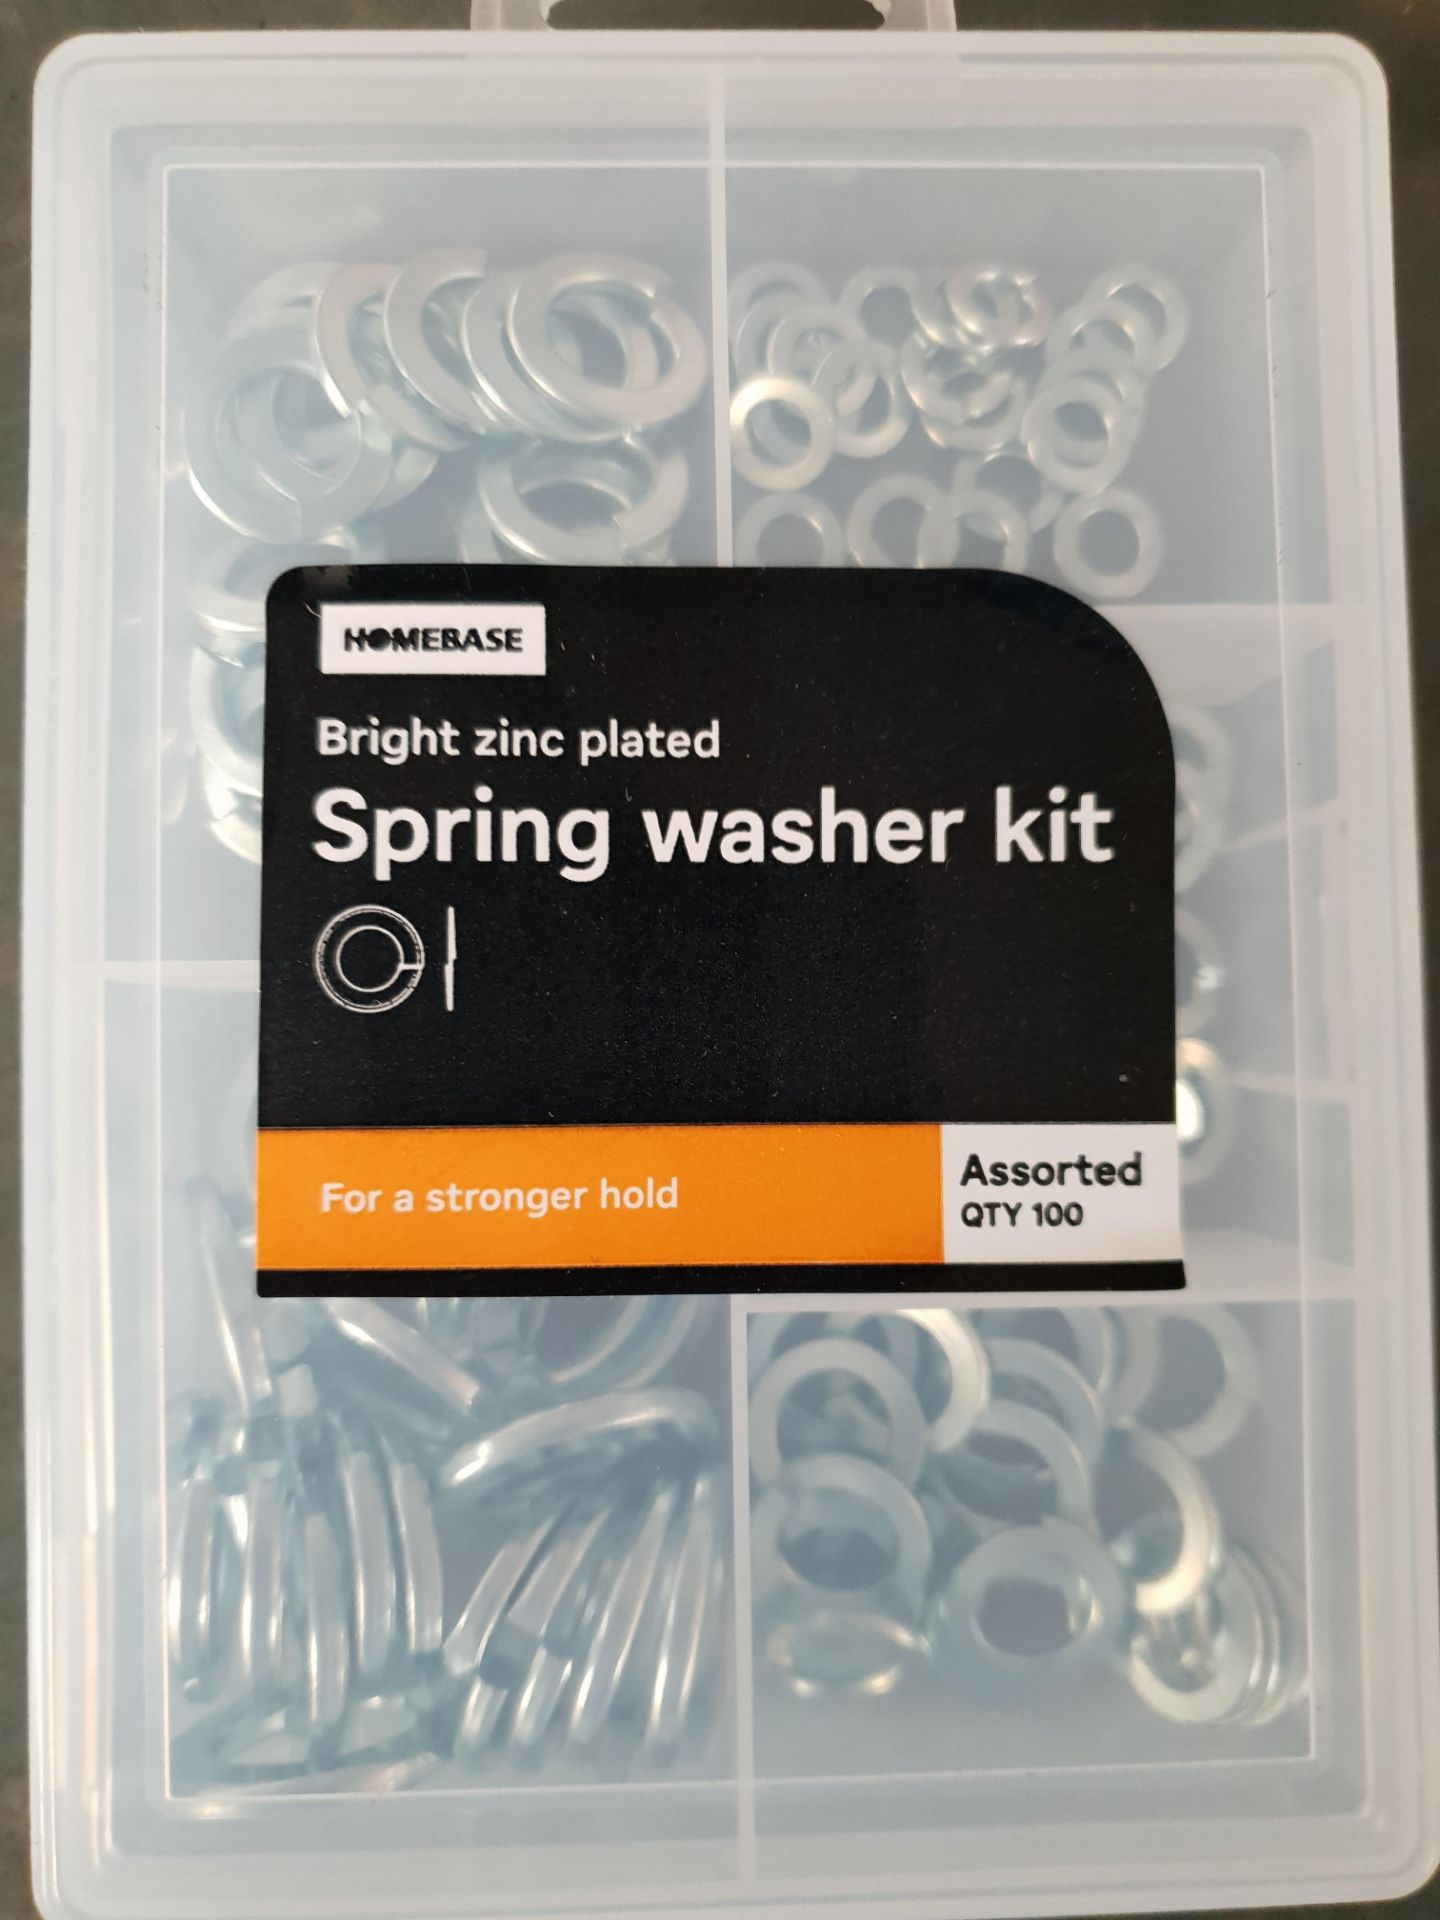 10 - Spring washer Kits